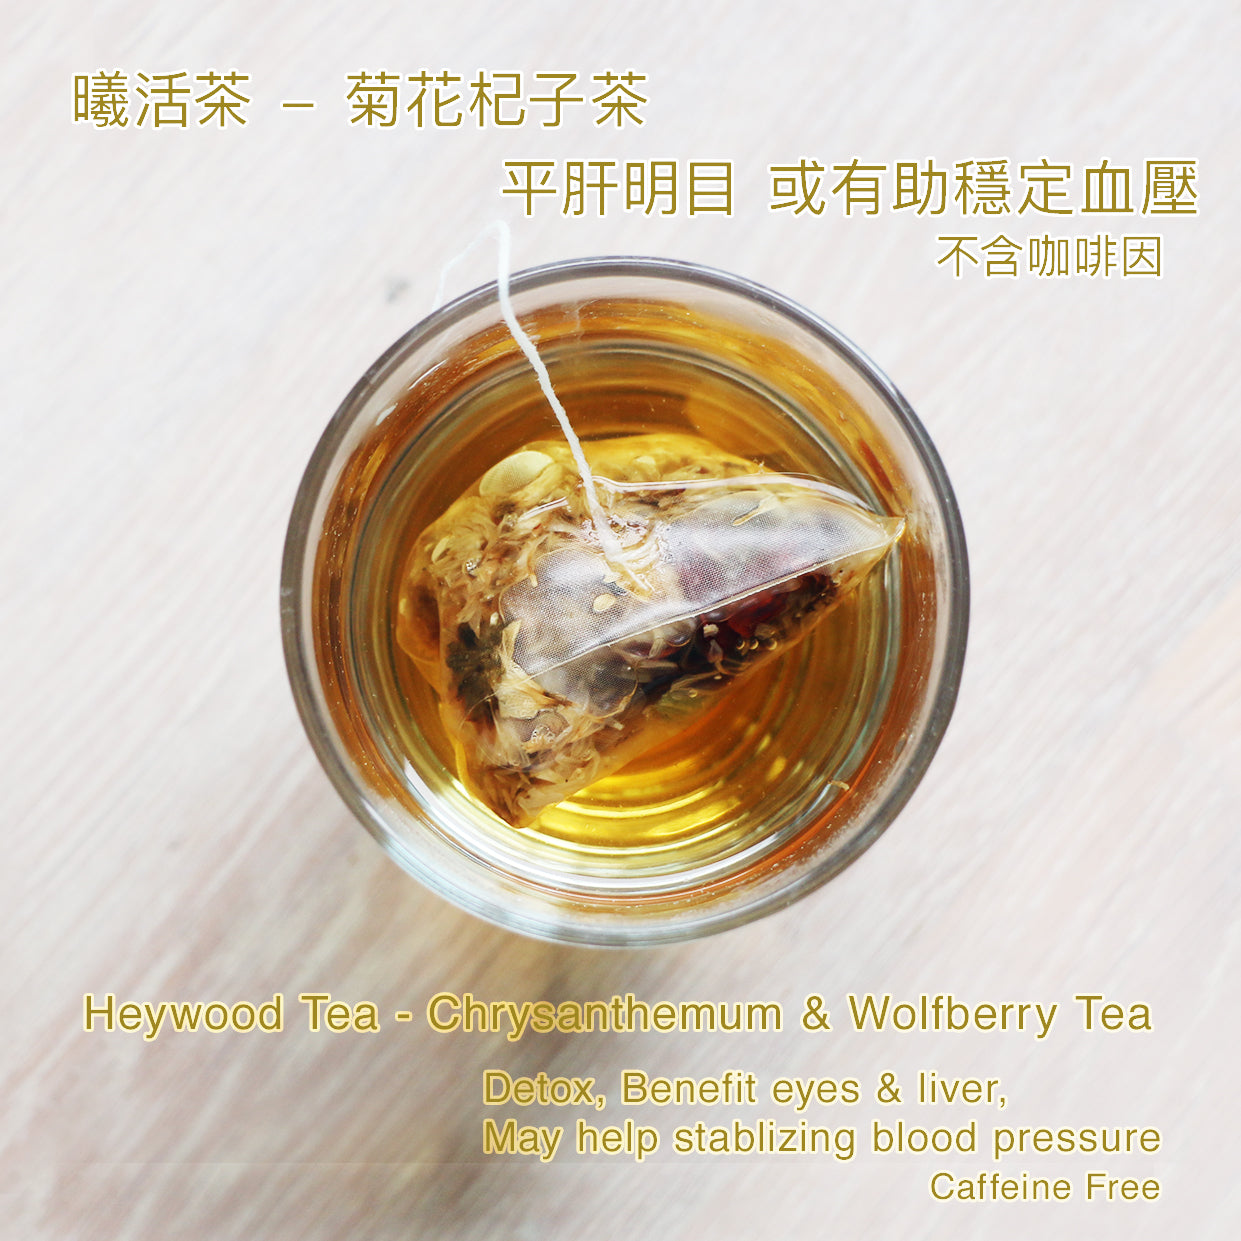 Heywood Tea Chrysanthemum & Wolfberry Tea 菊花杞子茶